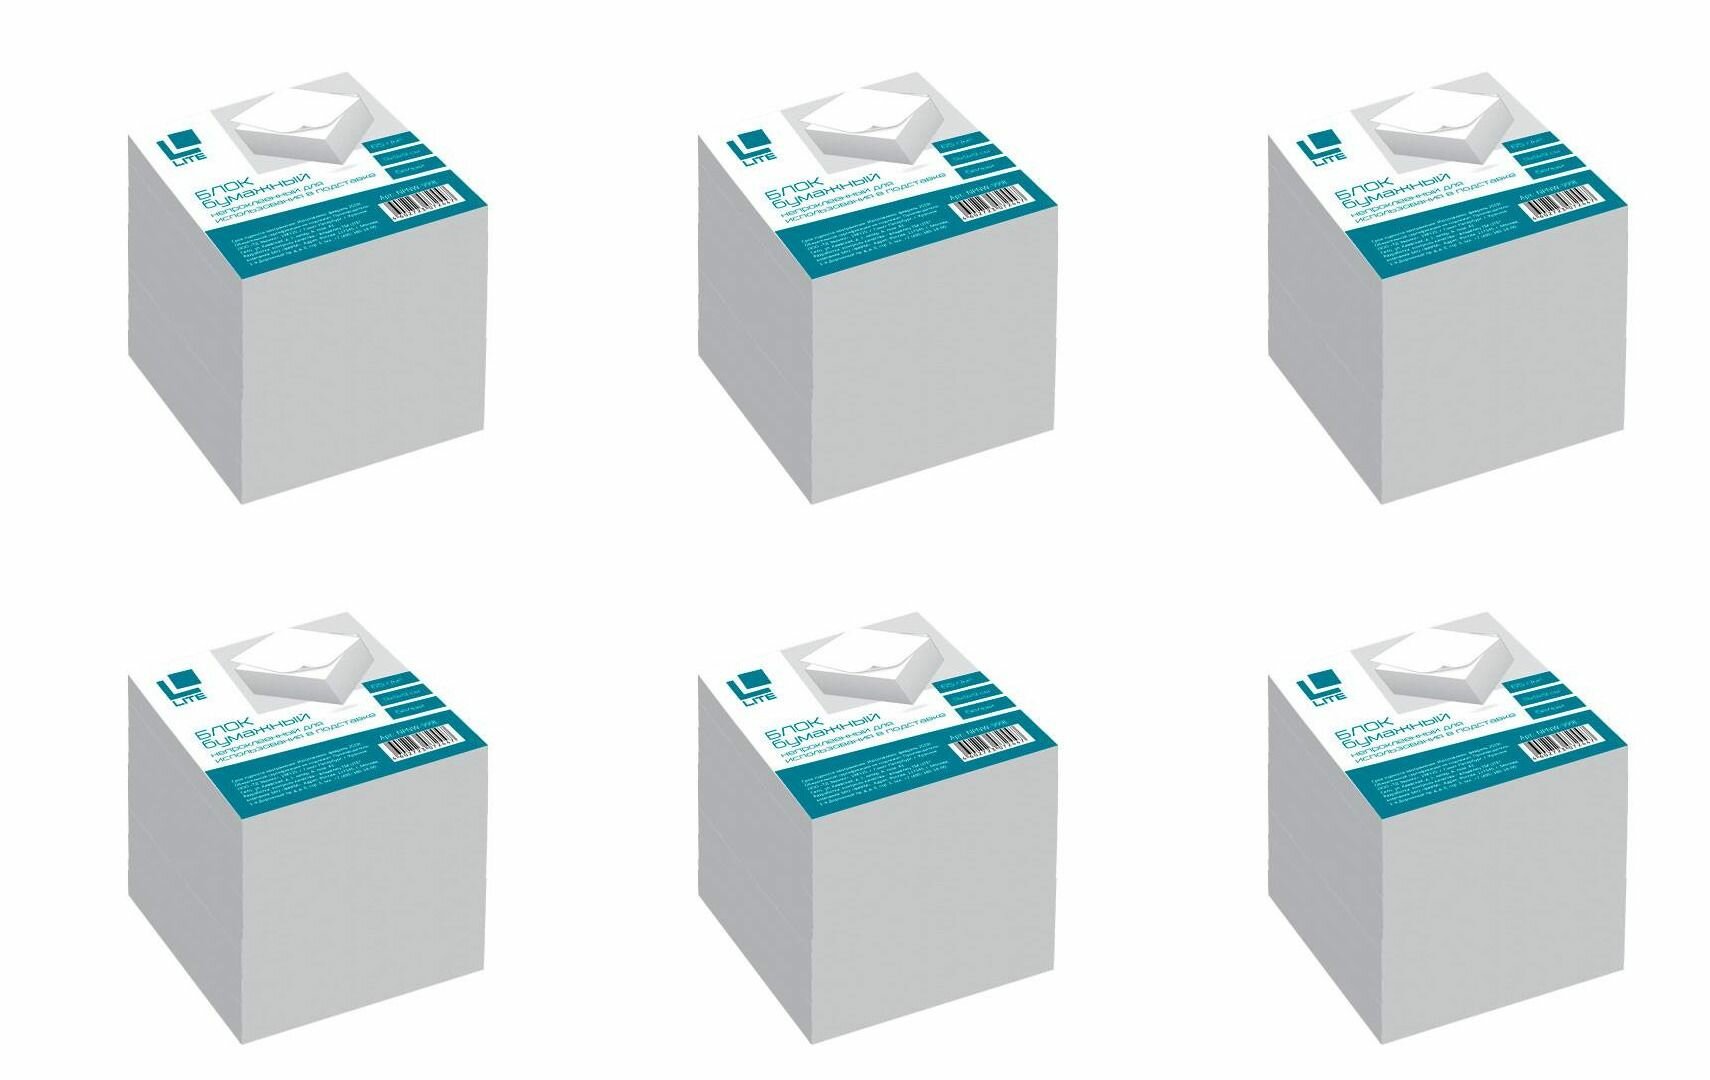 Lite Блок бумаги для записей Куб бумажный,90х90х90 мм, белый, 6 шт